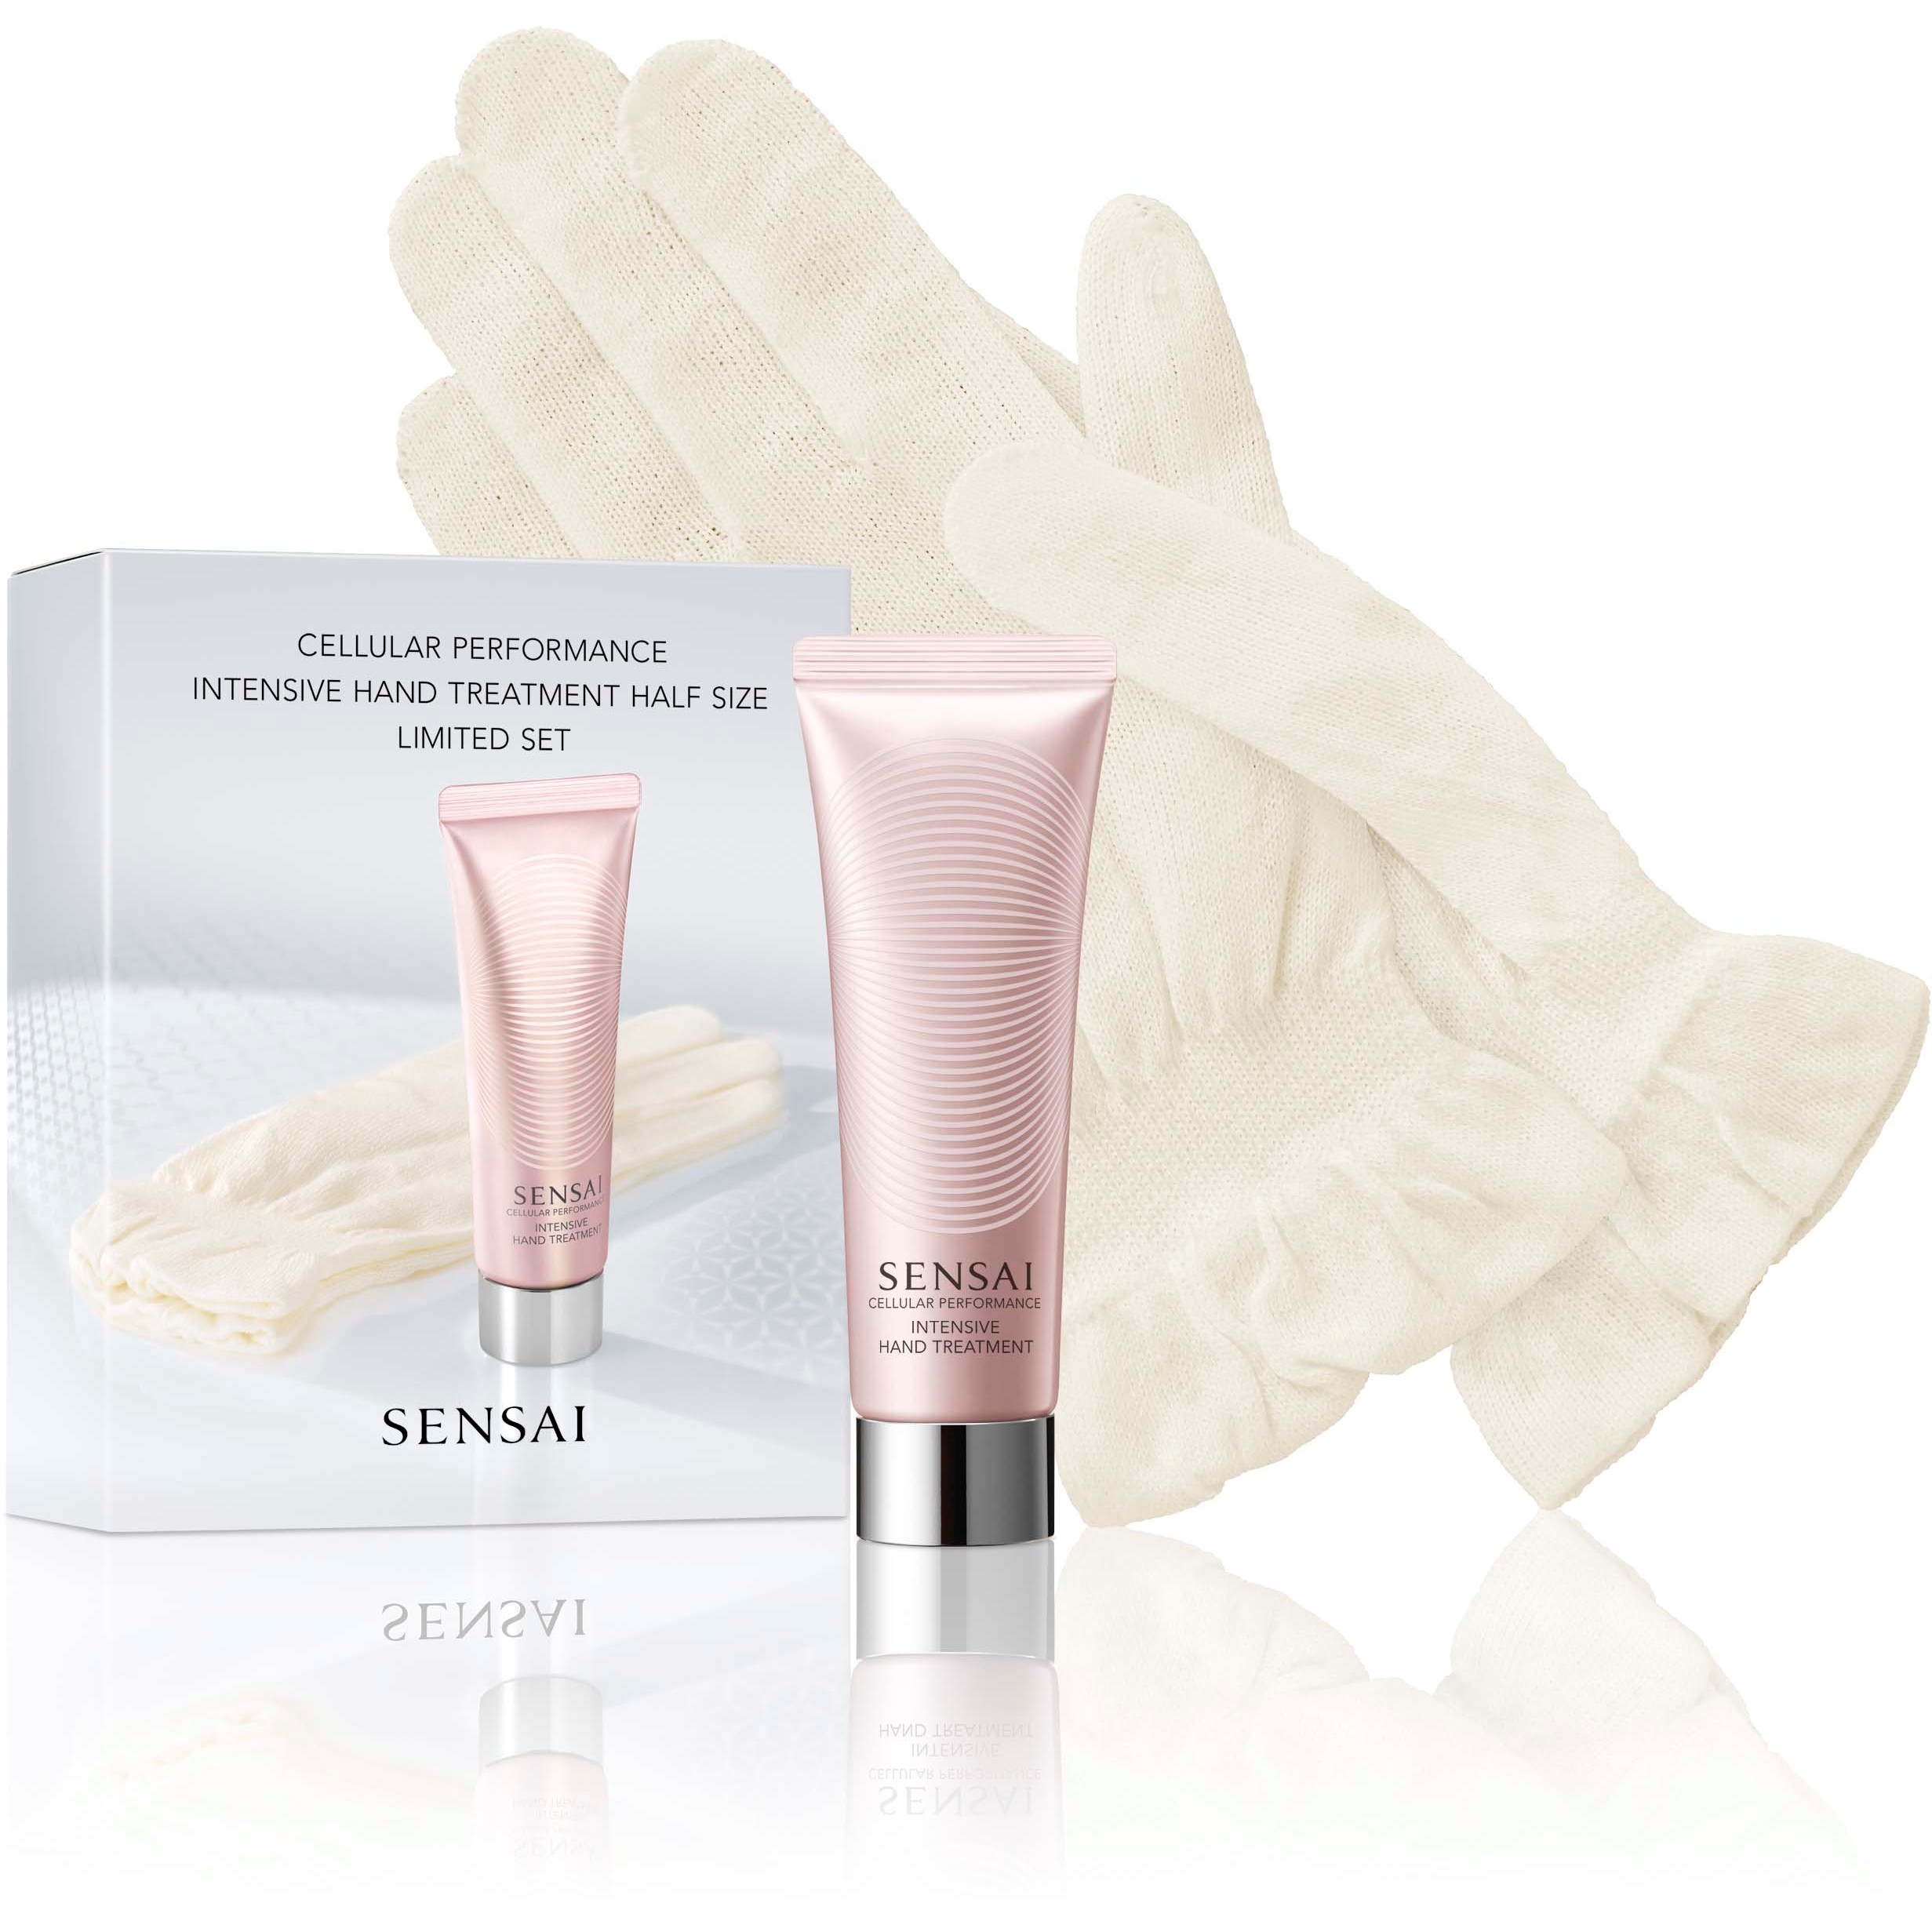 Bilde av Sensai Cellular Performance Hand Treatment Limited Edition